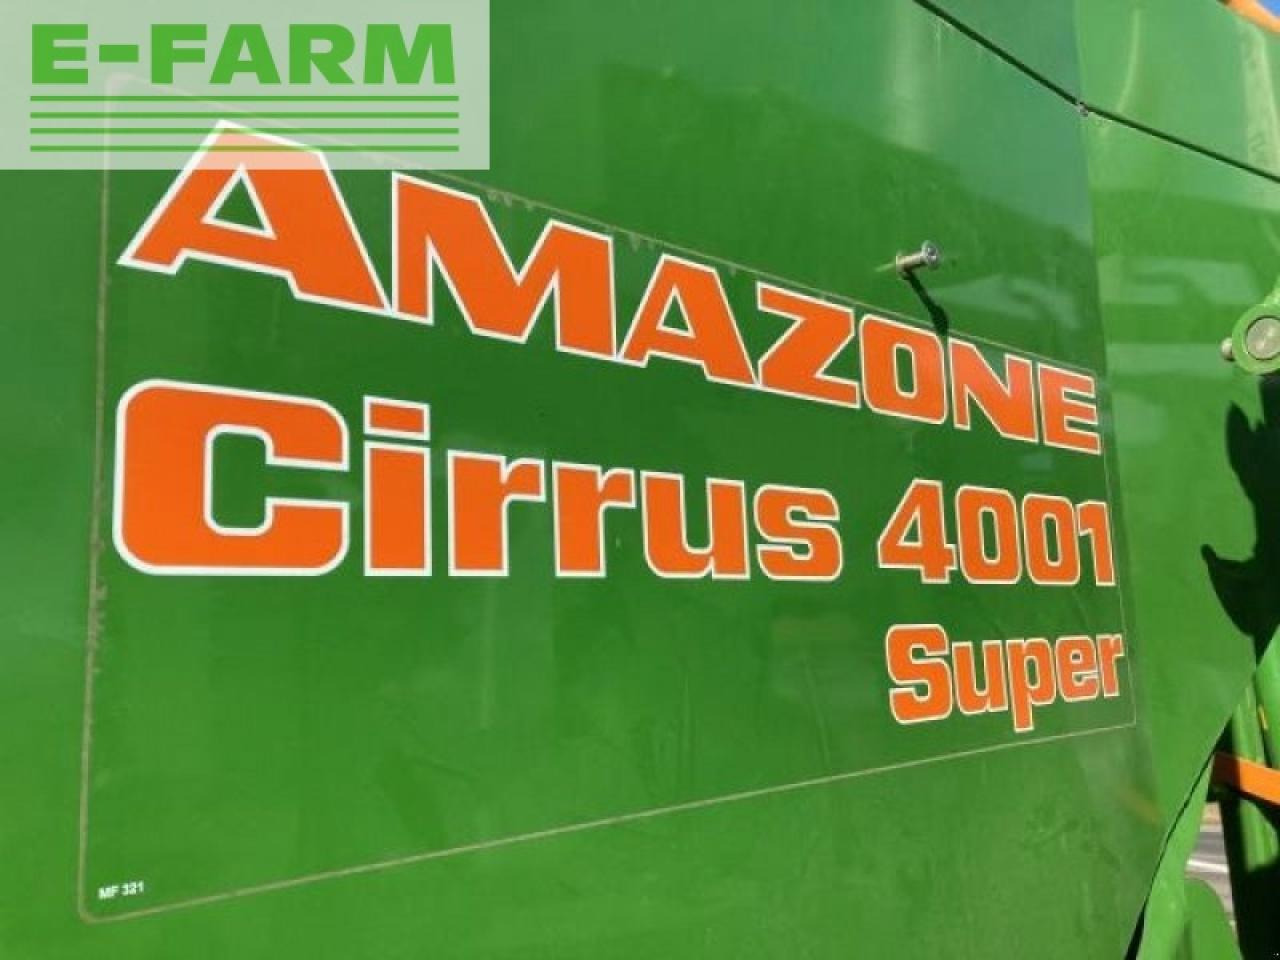 Sembradora de precisión Amazone cirrus 4001 super: foto 6